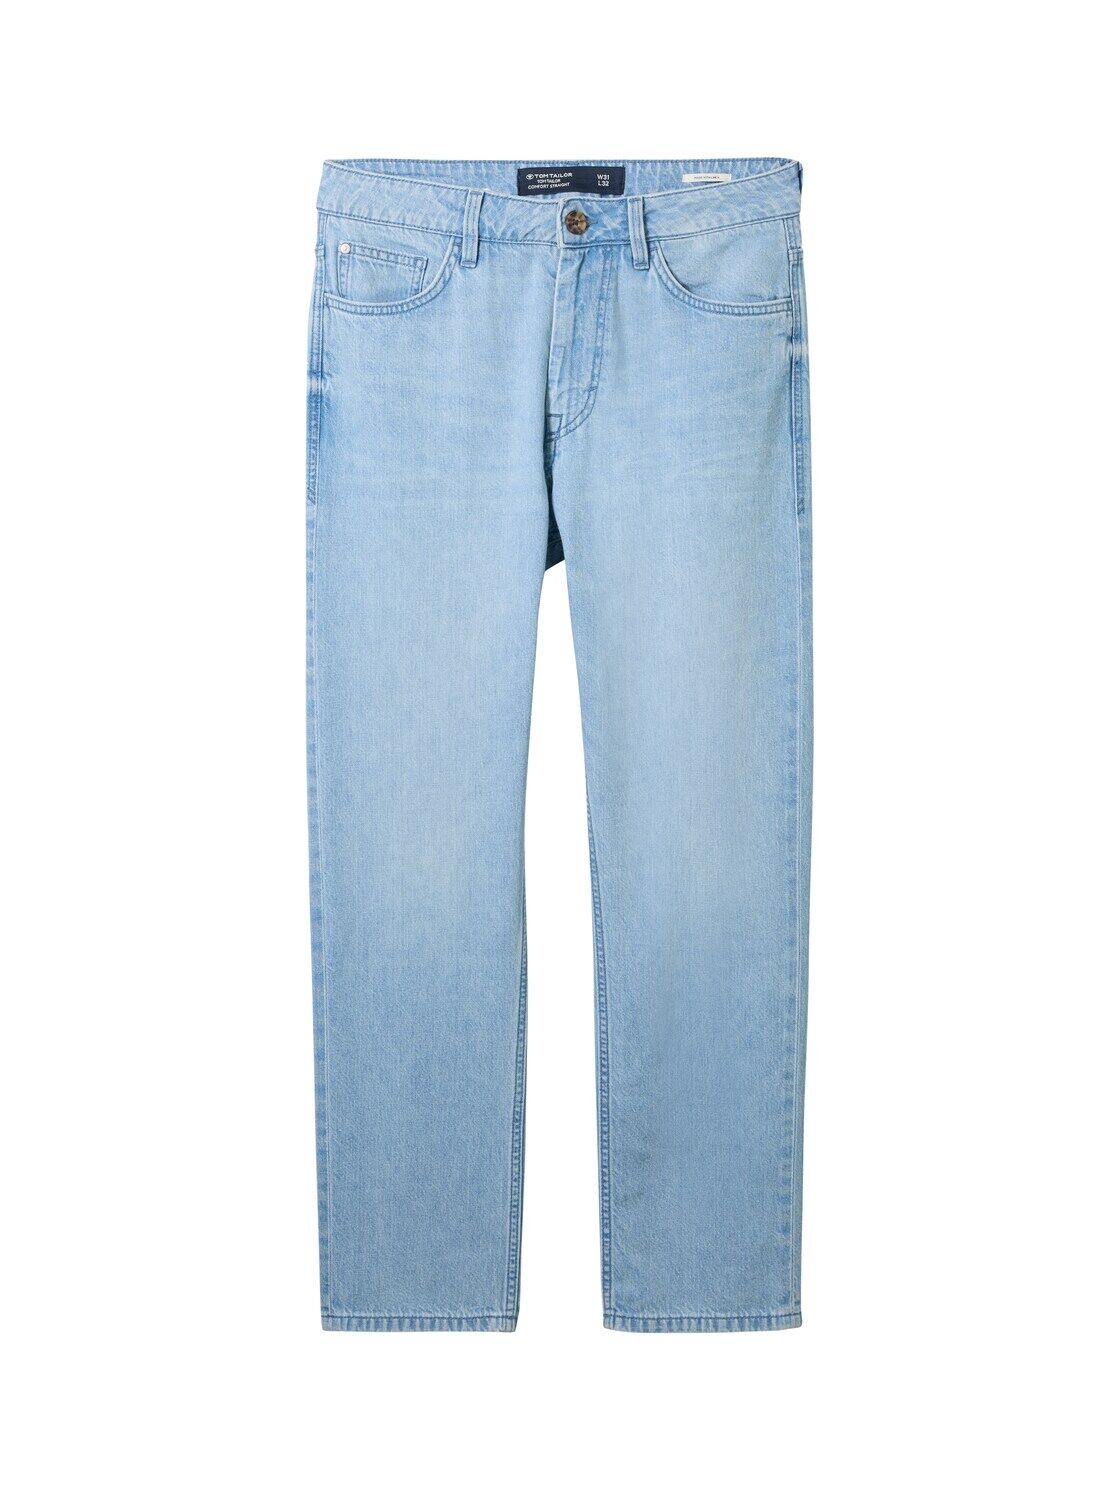 TOM TAILOR Herren Comfort Straight Jeans, blau, Uni, Gr. 36/36